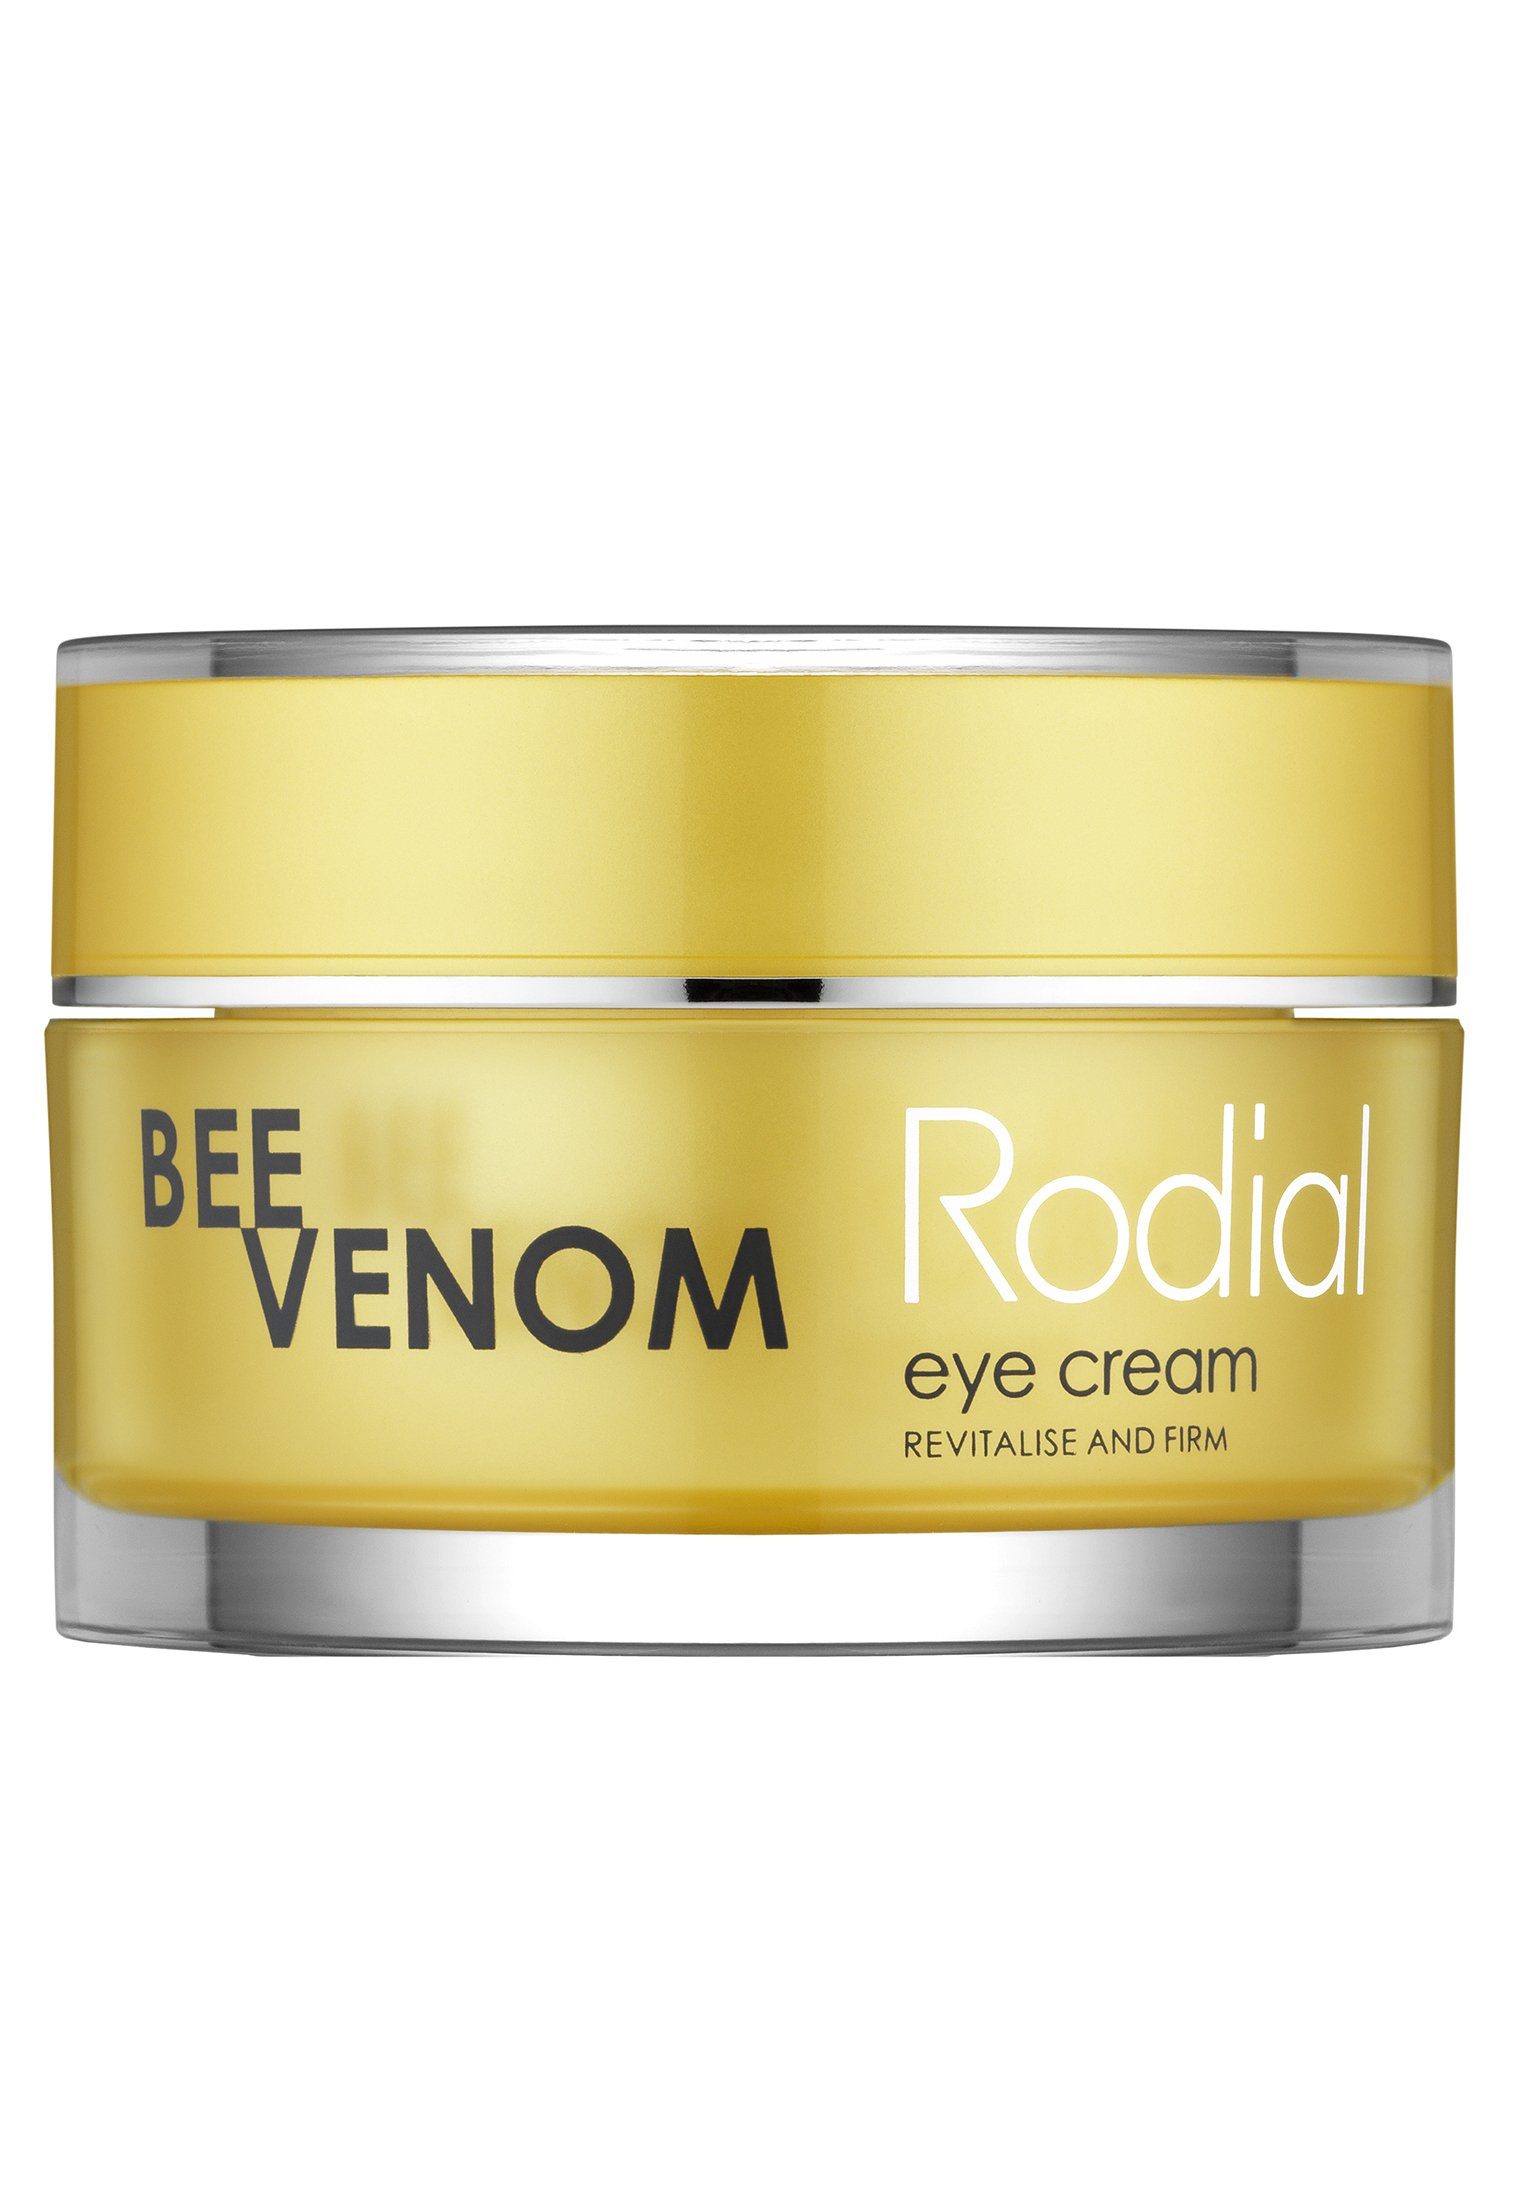 Venom Rodial Eye Augencreme Augenpflege Cream Deluxe Bee Rodial